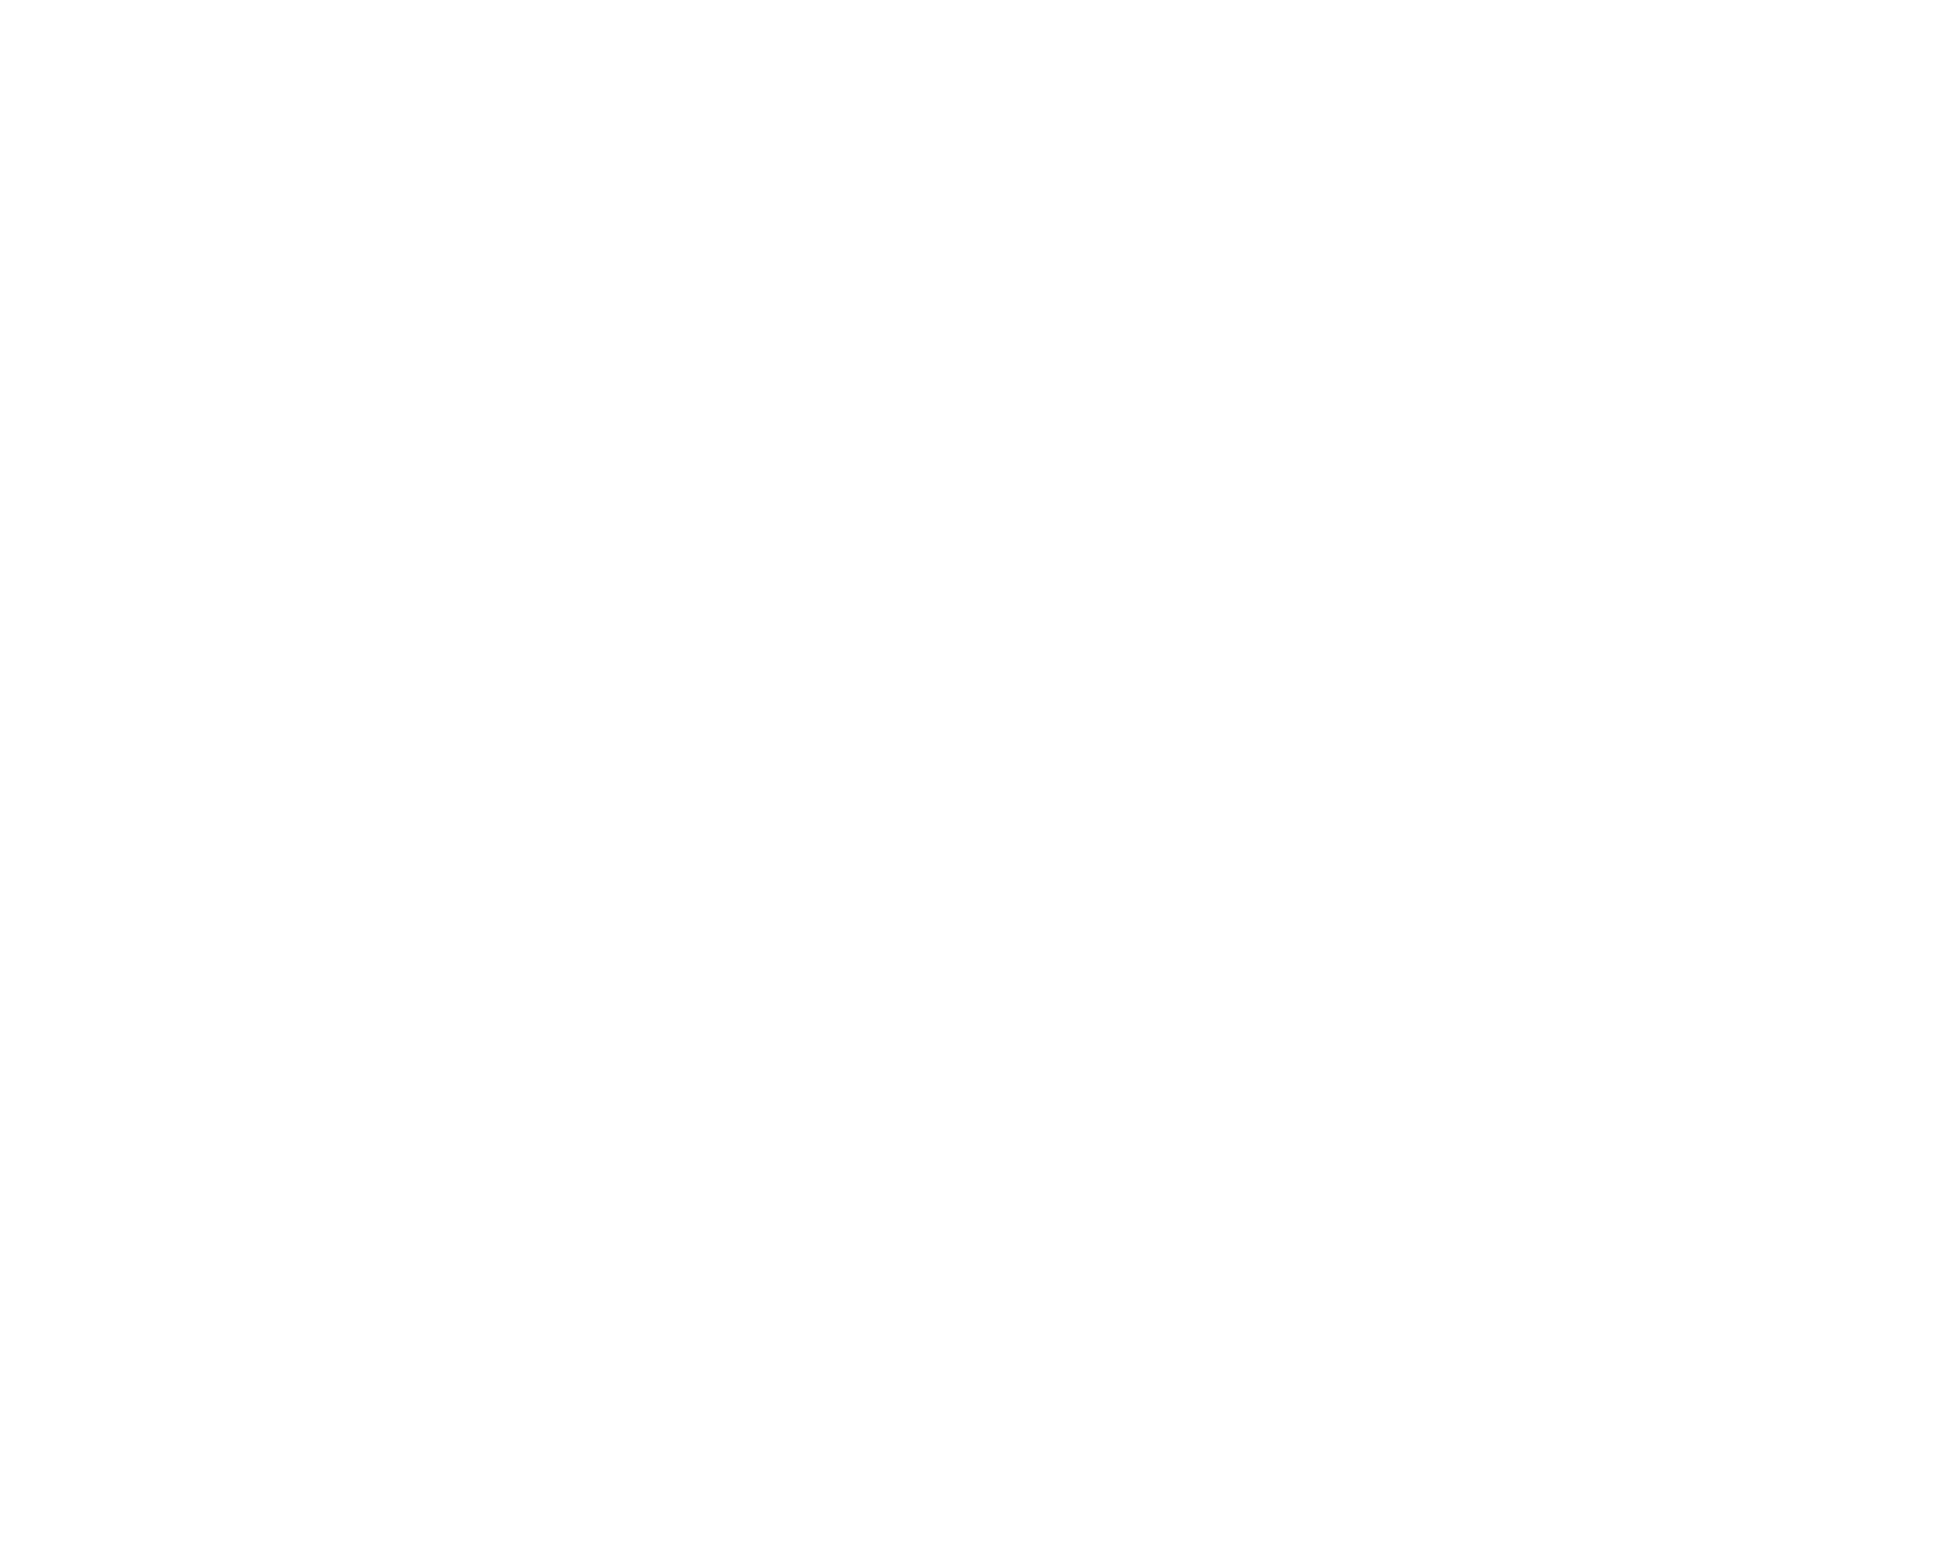 Dad Jokes? I think you mean, RAD JOKES